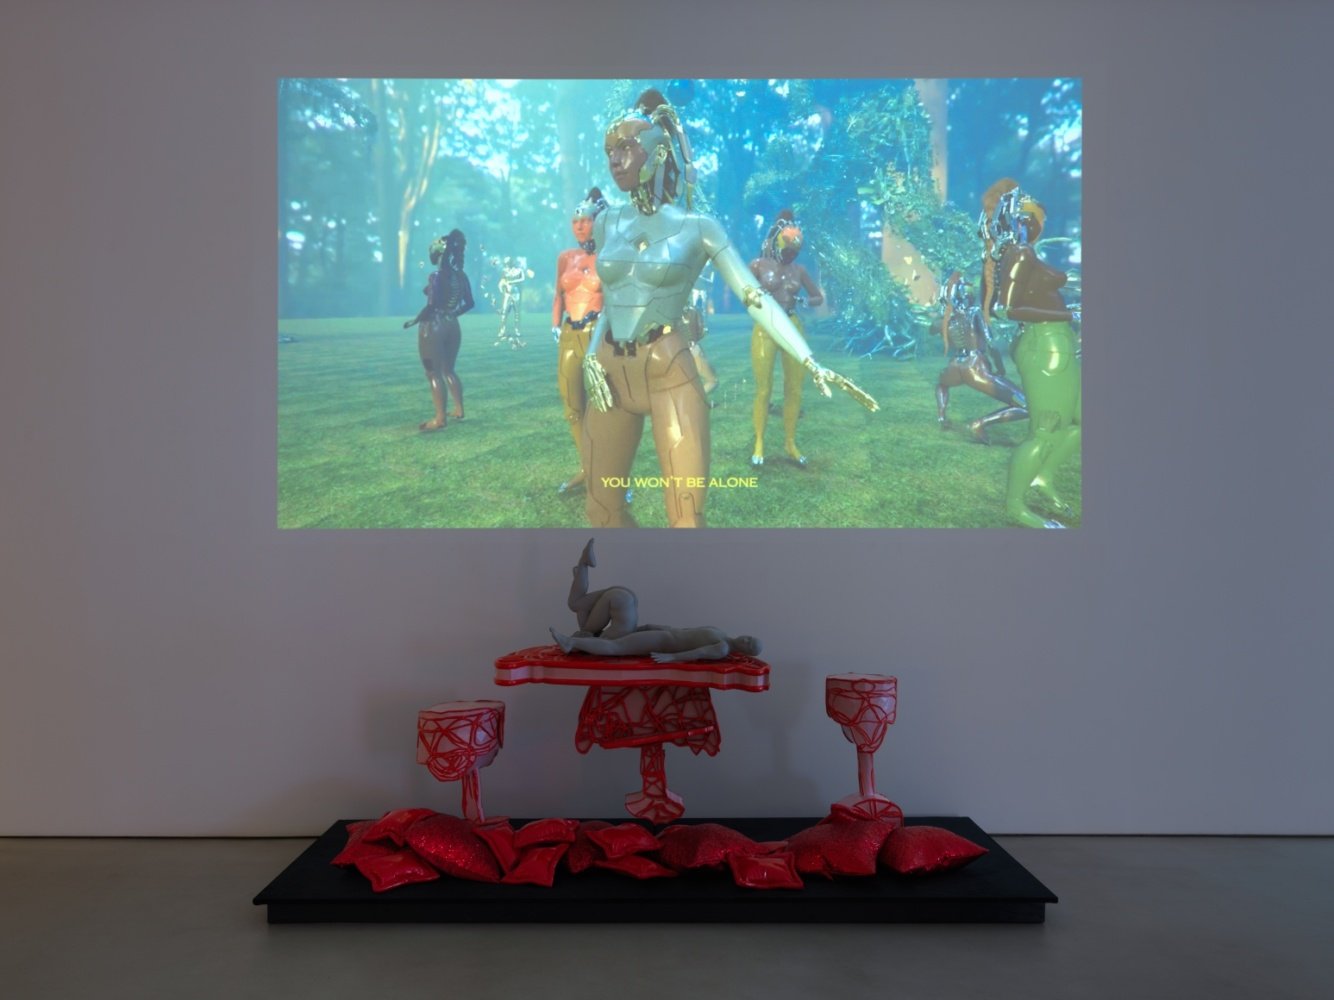 a video still of black robots above a sculpture of figures reclining on red pillows